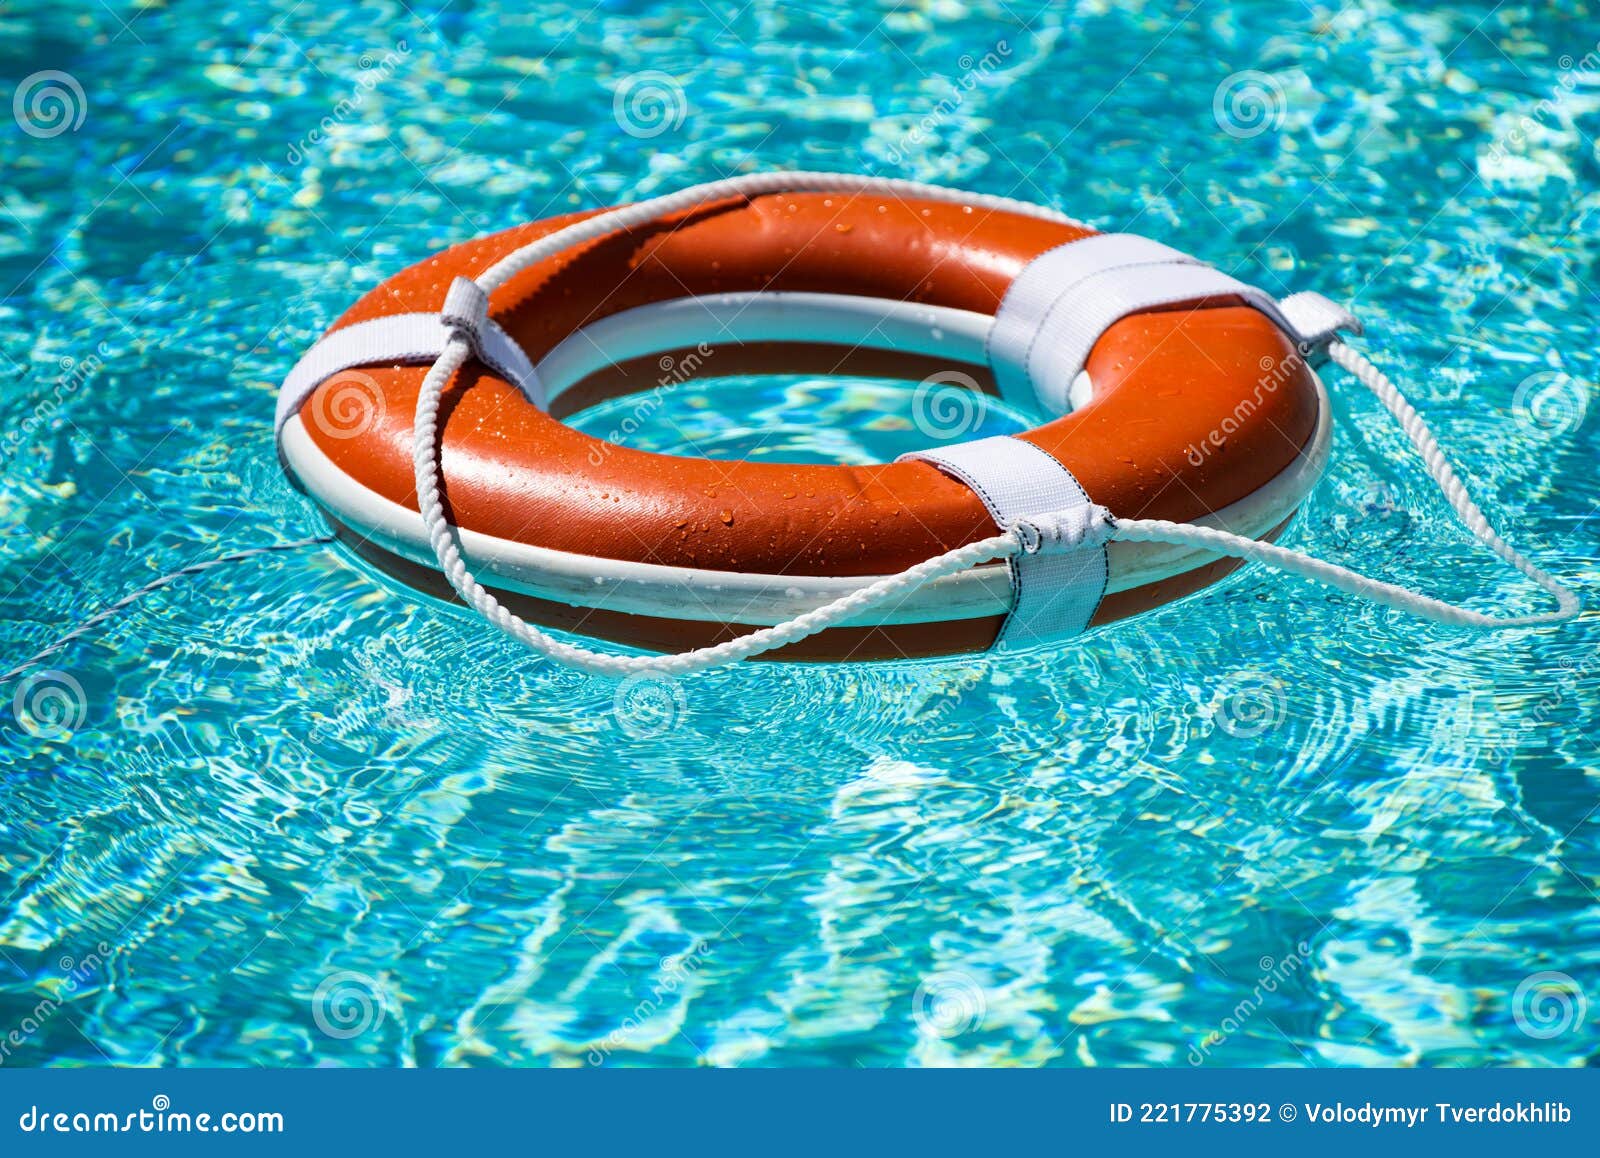 Hudhud - Giant Orange Inflatable Adult Sea Buoy With Handle 100 Cm, Pool  Beach Life Buoy, Inflatable Bag +9 Years